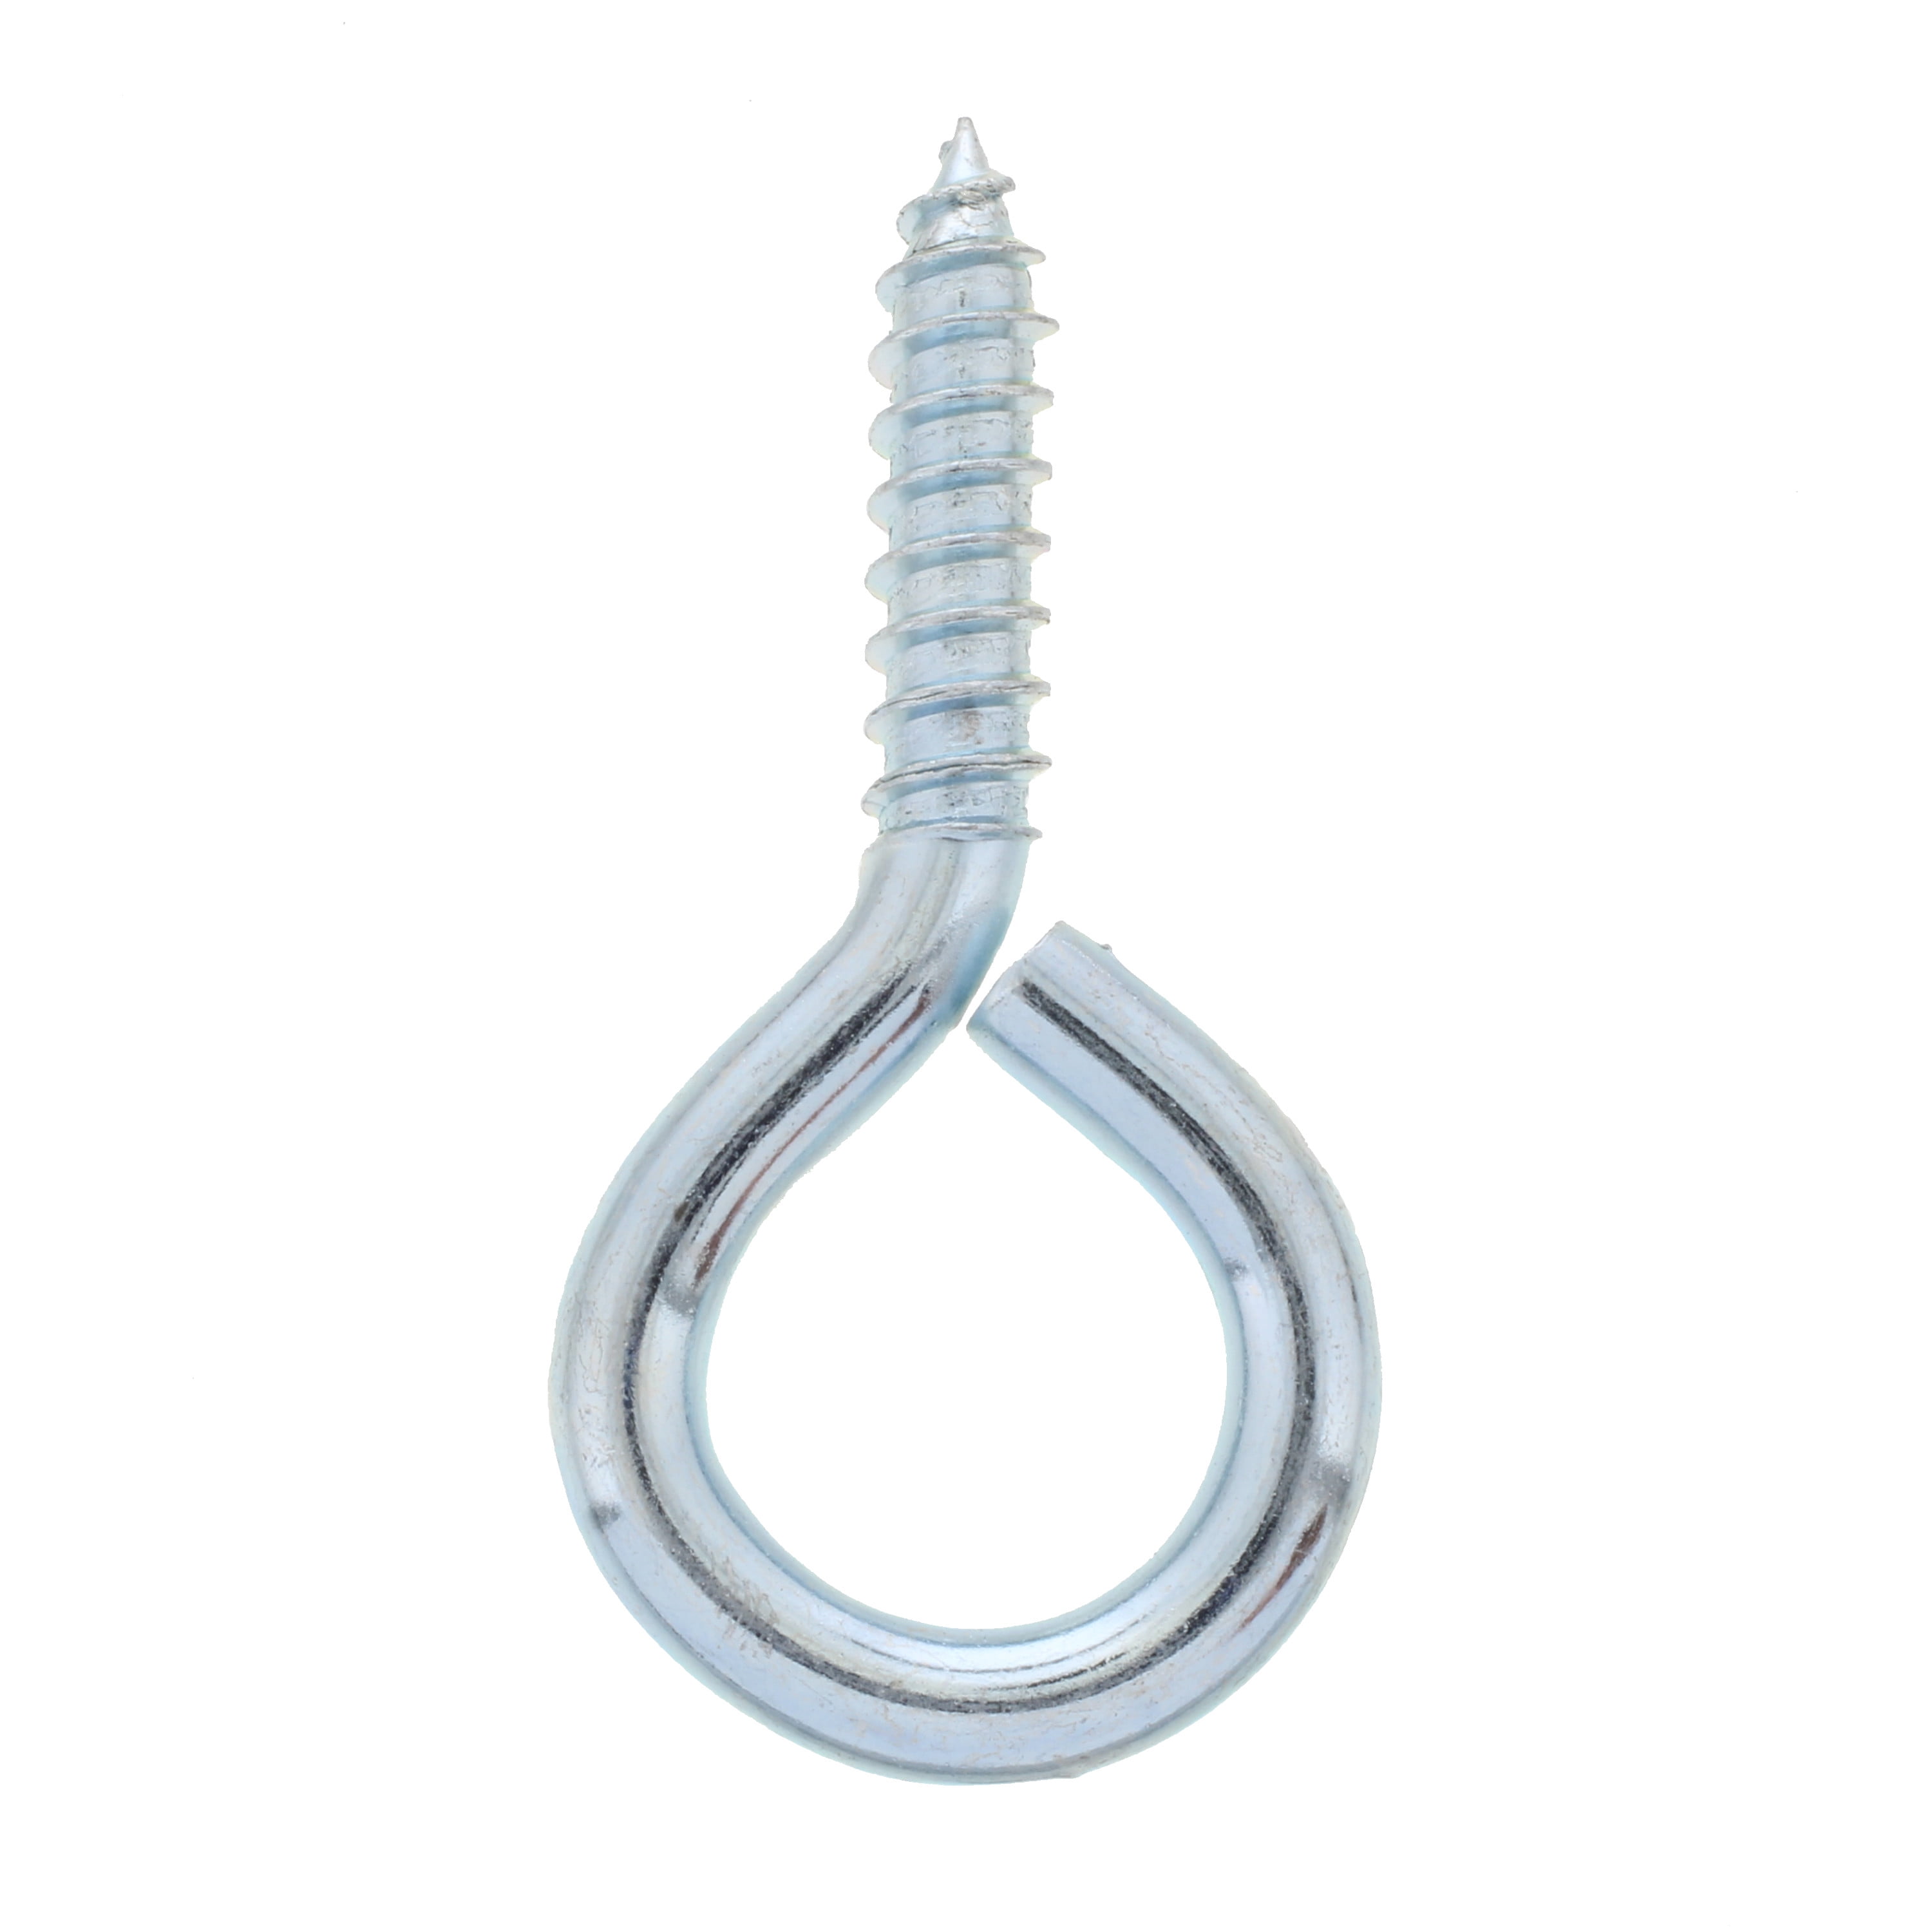 1#-14# Brass/Zinc Plated Screws Eye Pins Hanging Hooks Threaded Hardware Screws 